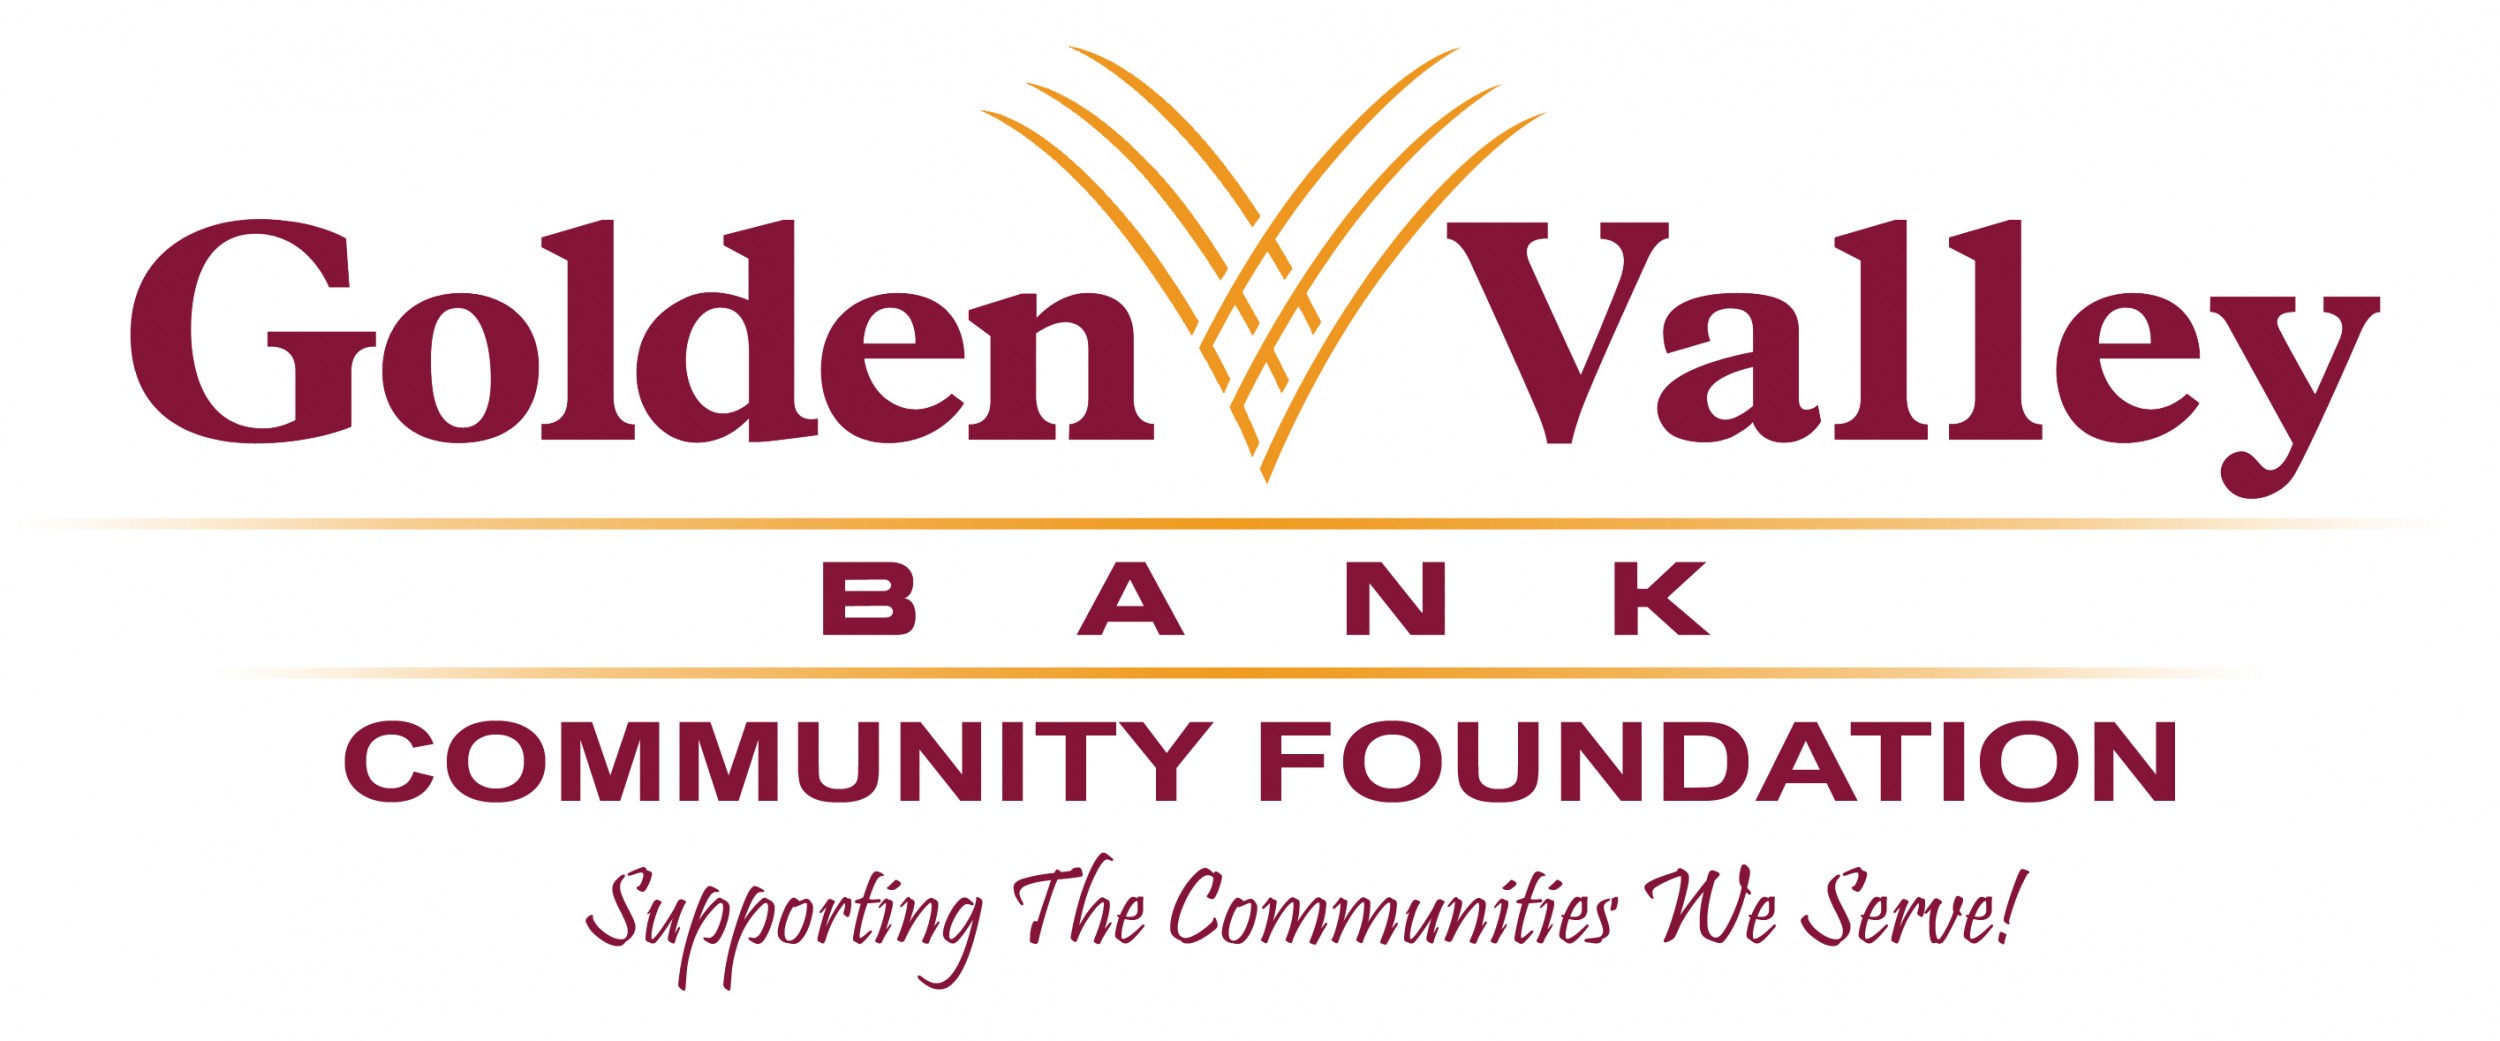 Golden Valley Bank Community Foundation Logo